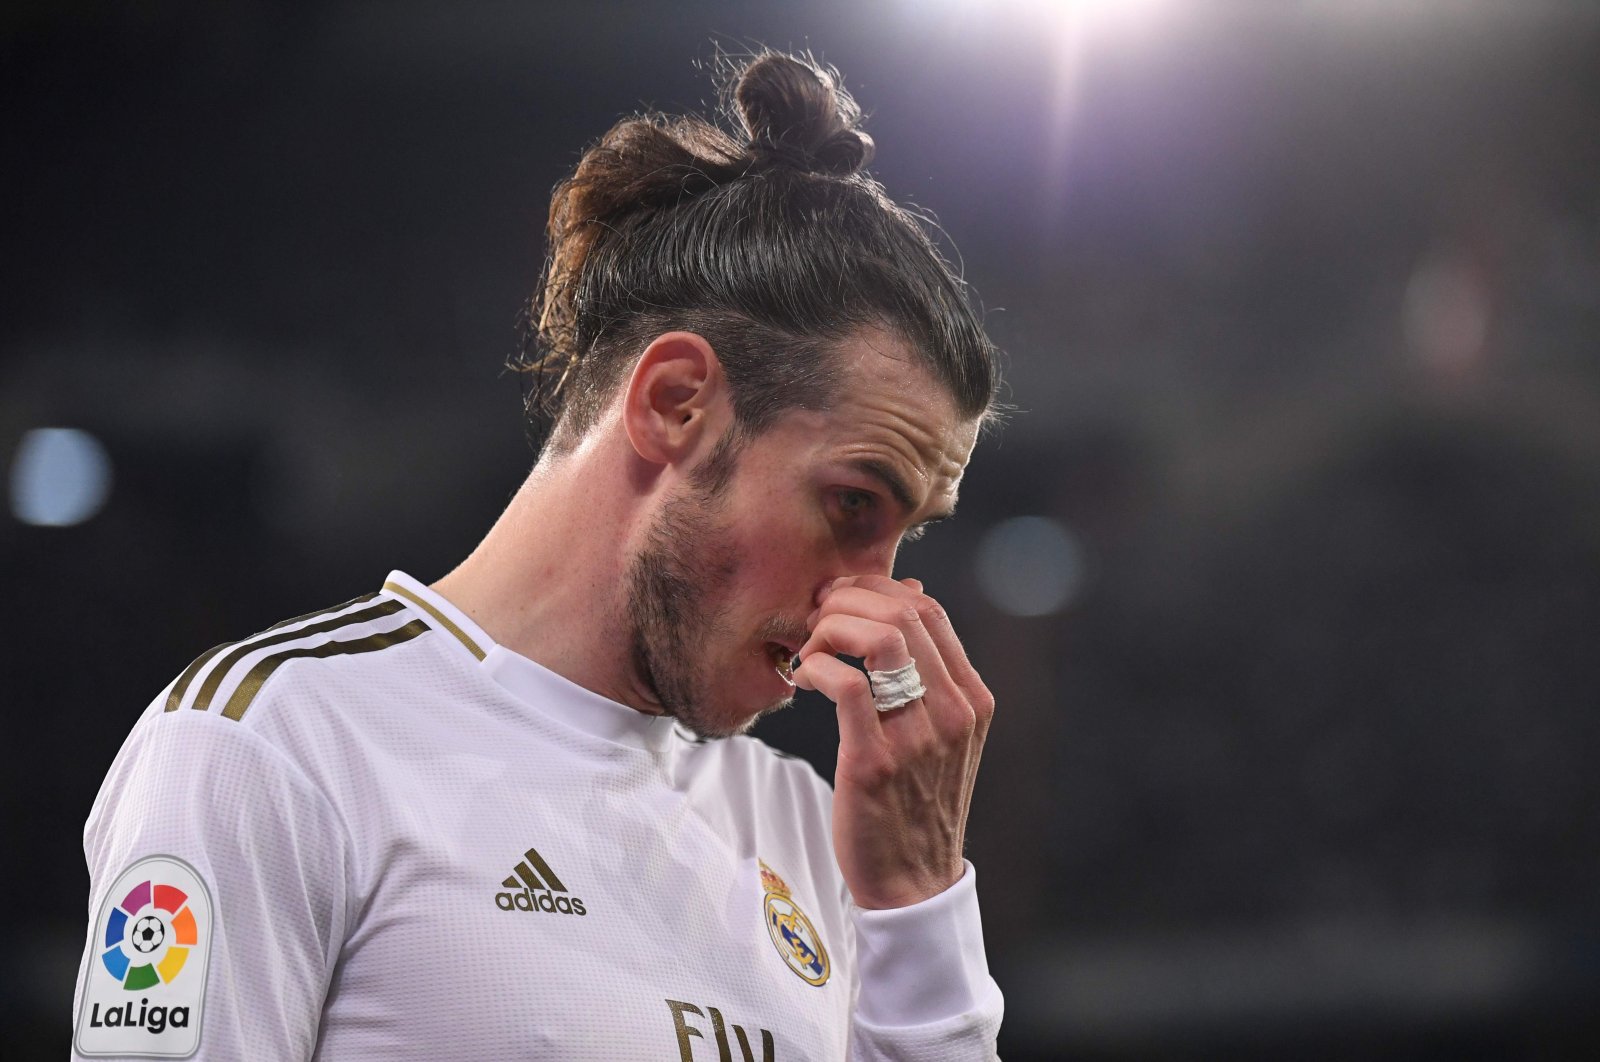 Real Madrid's Gareth Bale reacts during a La Liga match against Celta de Vigo, in Madrid, Spain, Feb. 16, 2020. (AFP Photo)